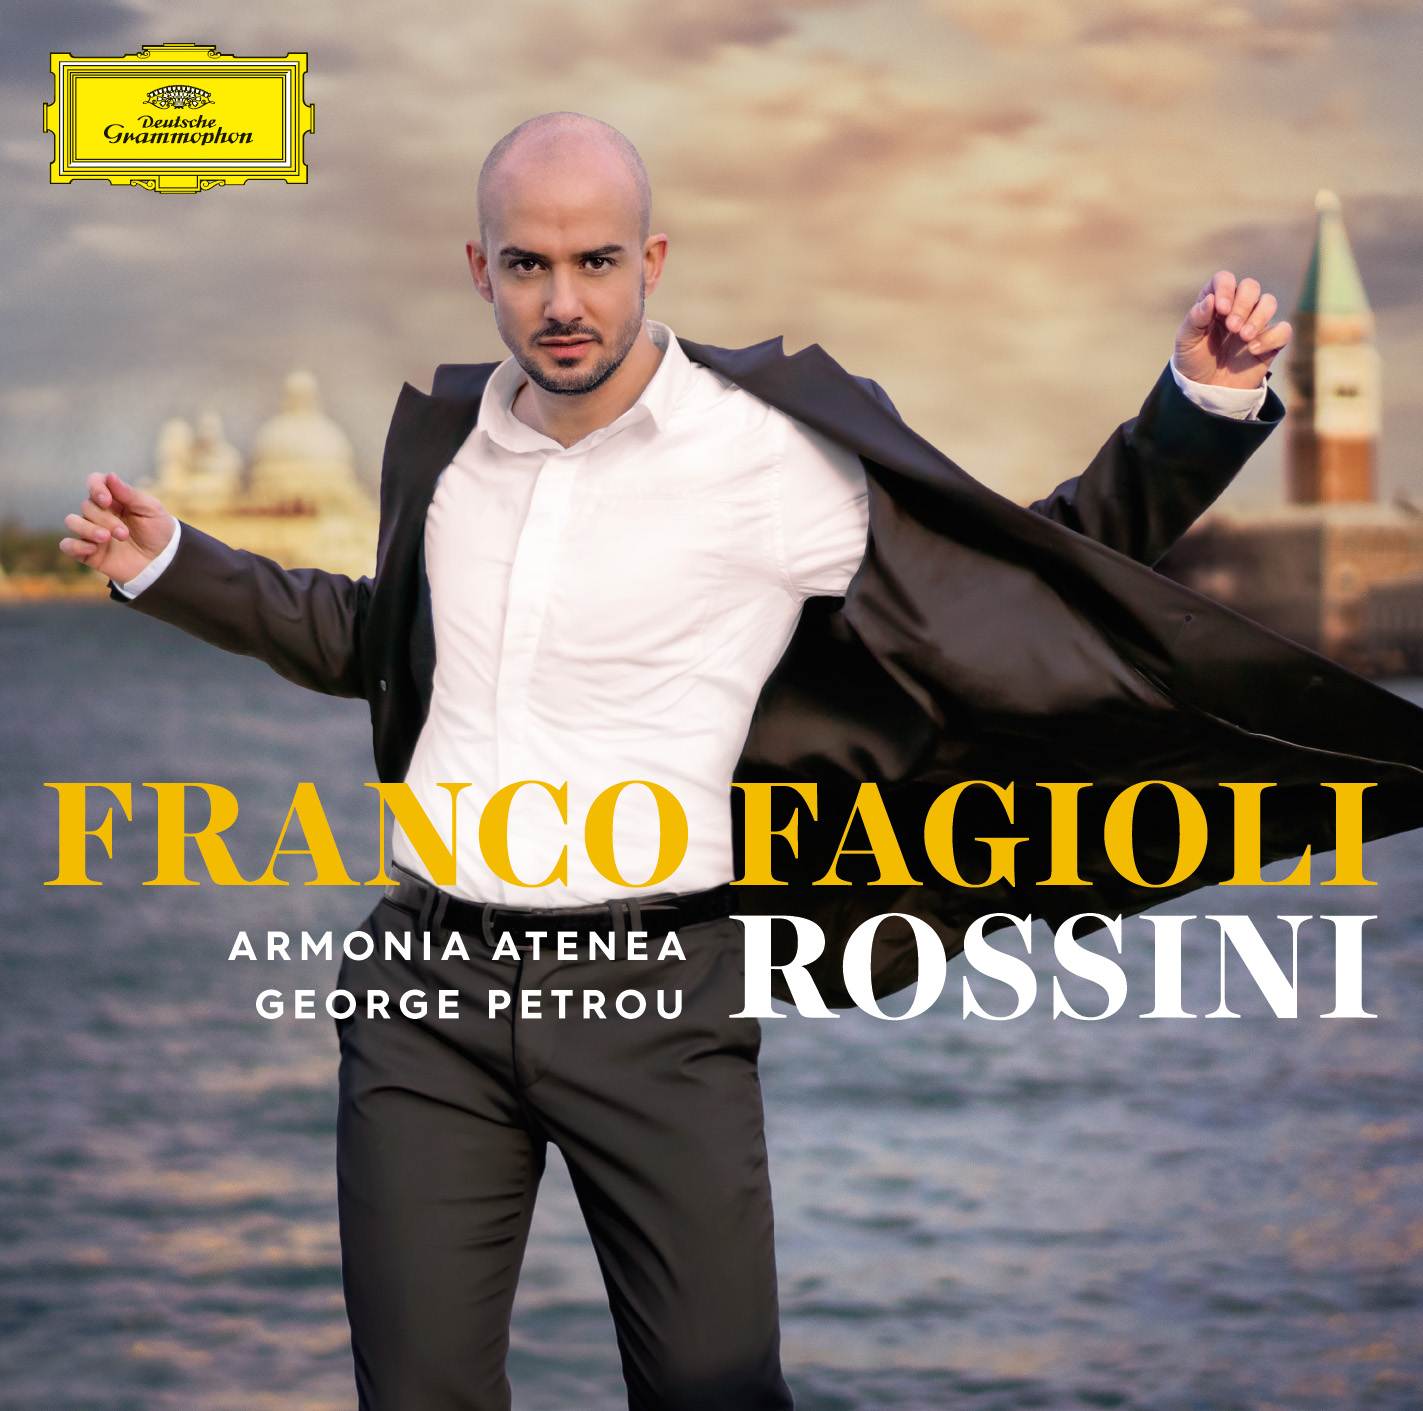 Franco Fagioli, Rossini, parution le 9 septembre 2016 (DG)